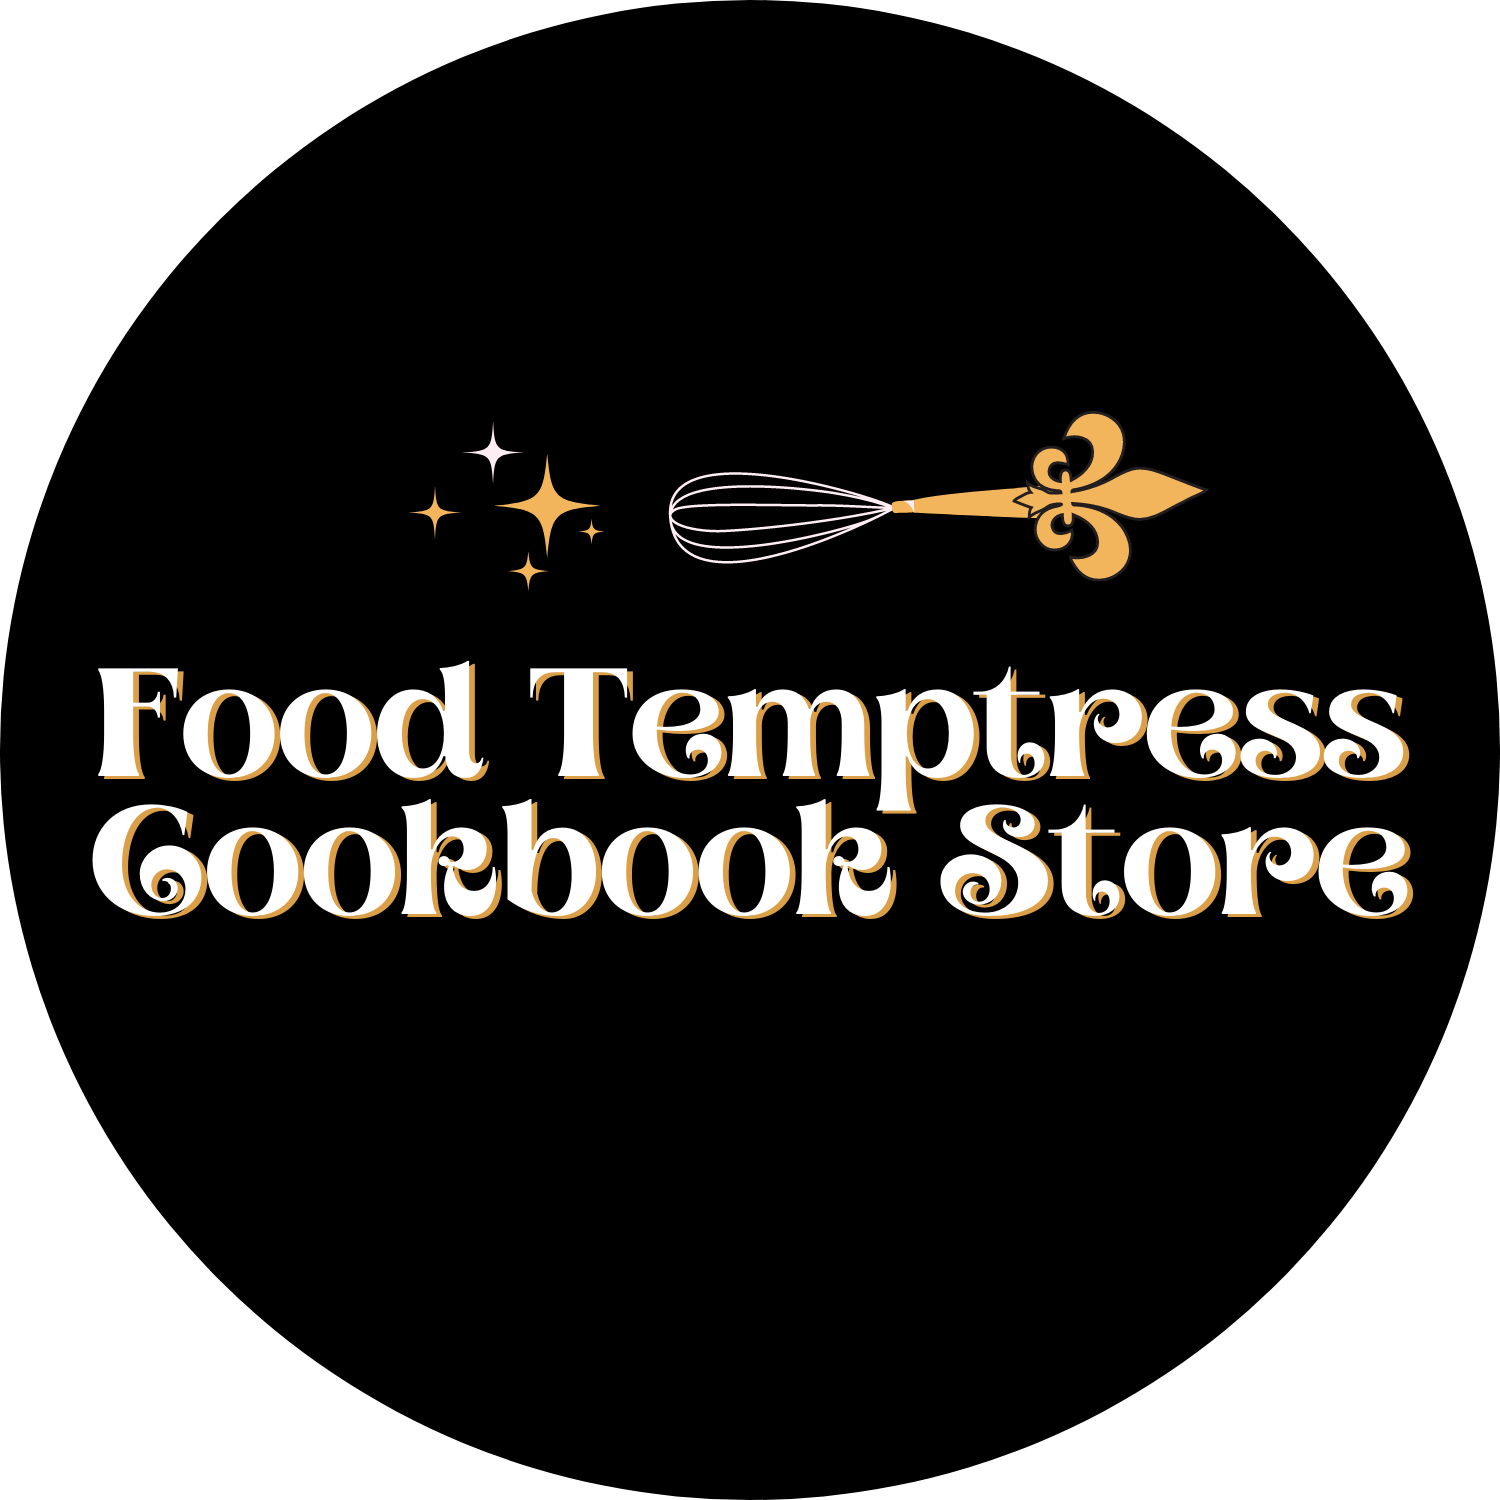 Food Temptress Cookbook Store